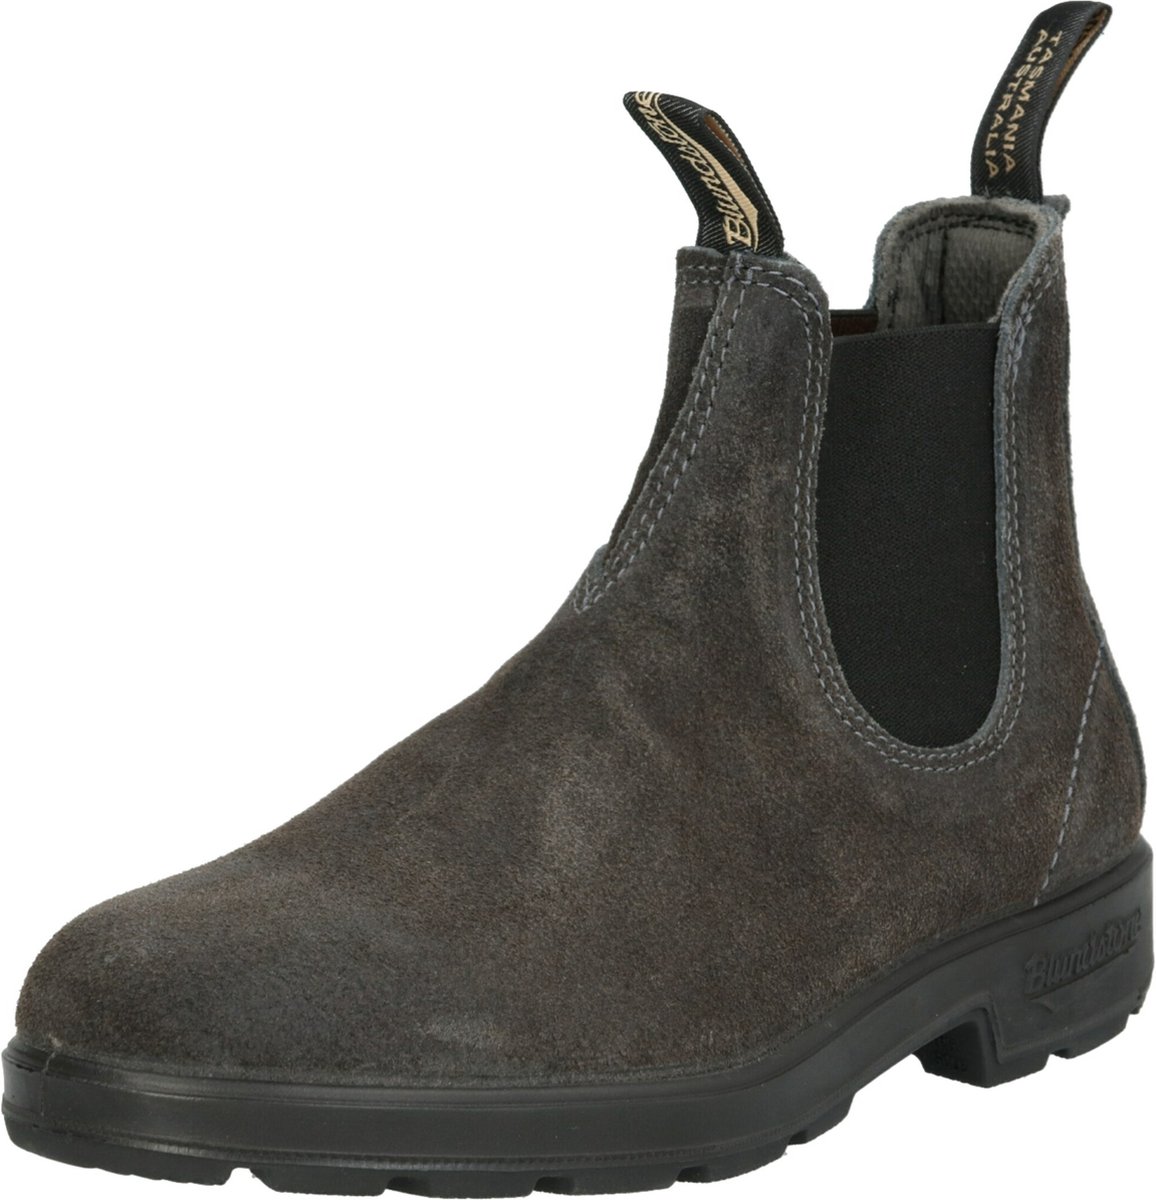 Blundstone Stiefel Boots #1910 Wax Suede (500 Series) Steel Grey-7UK